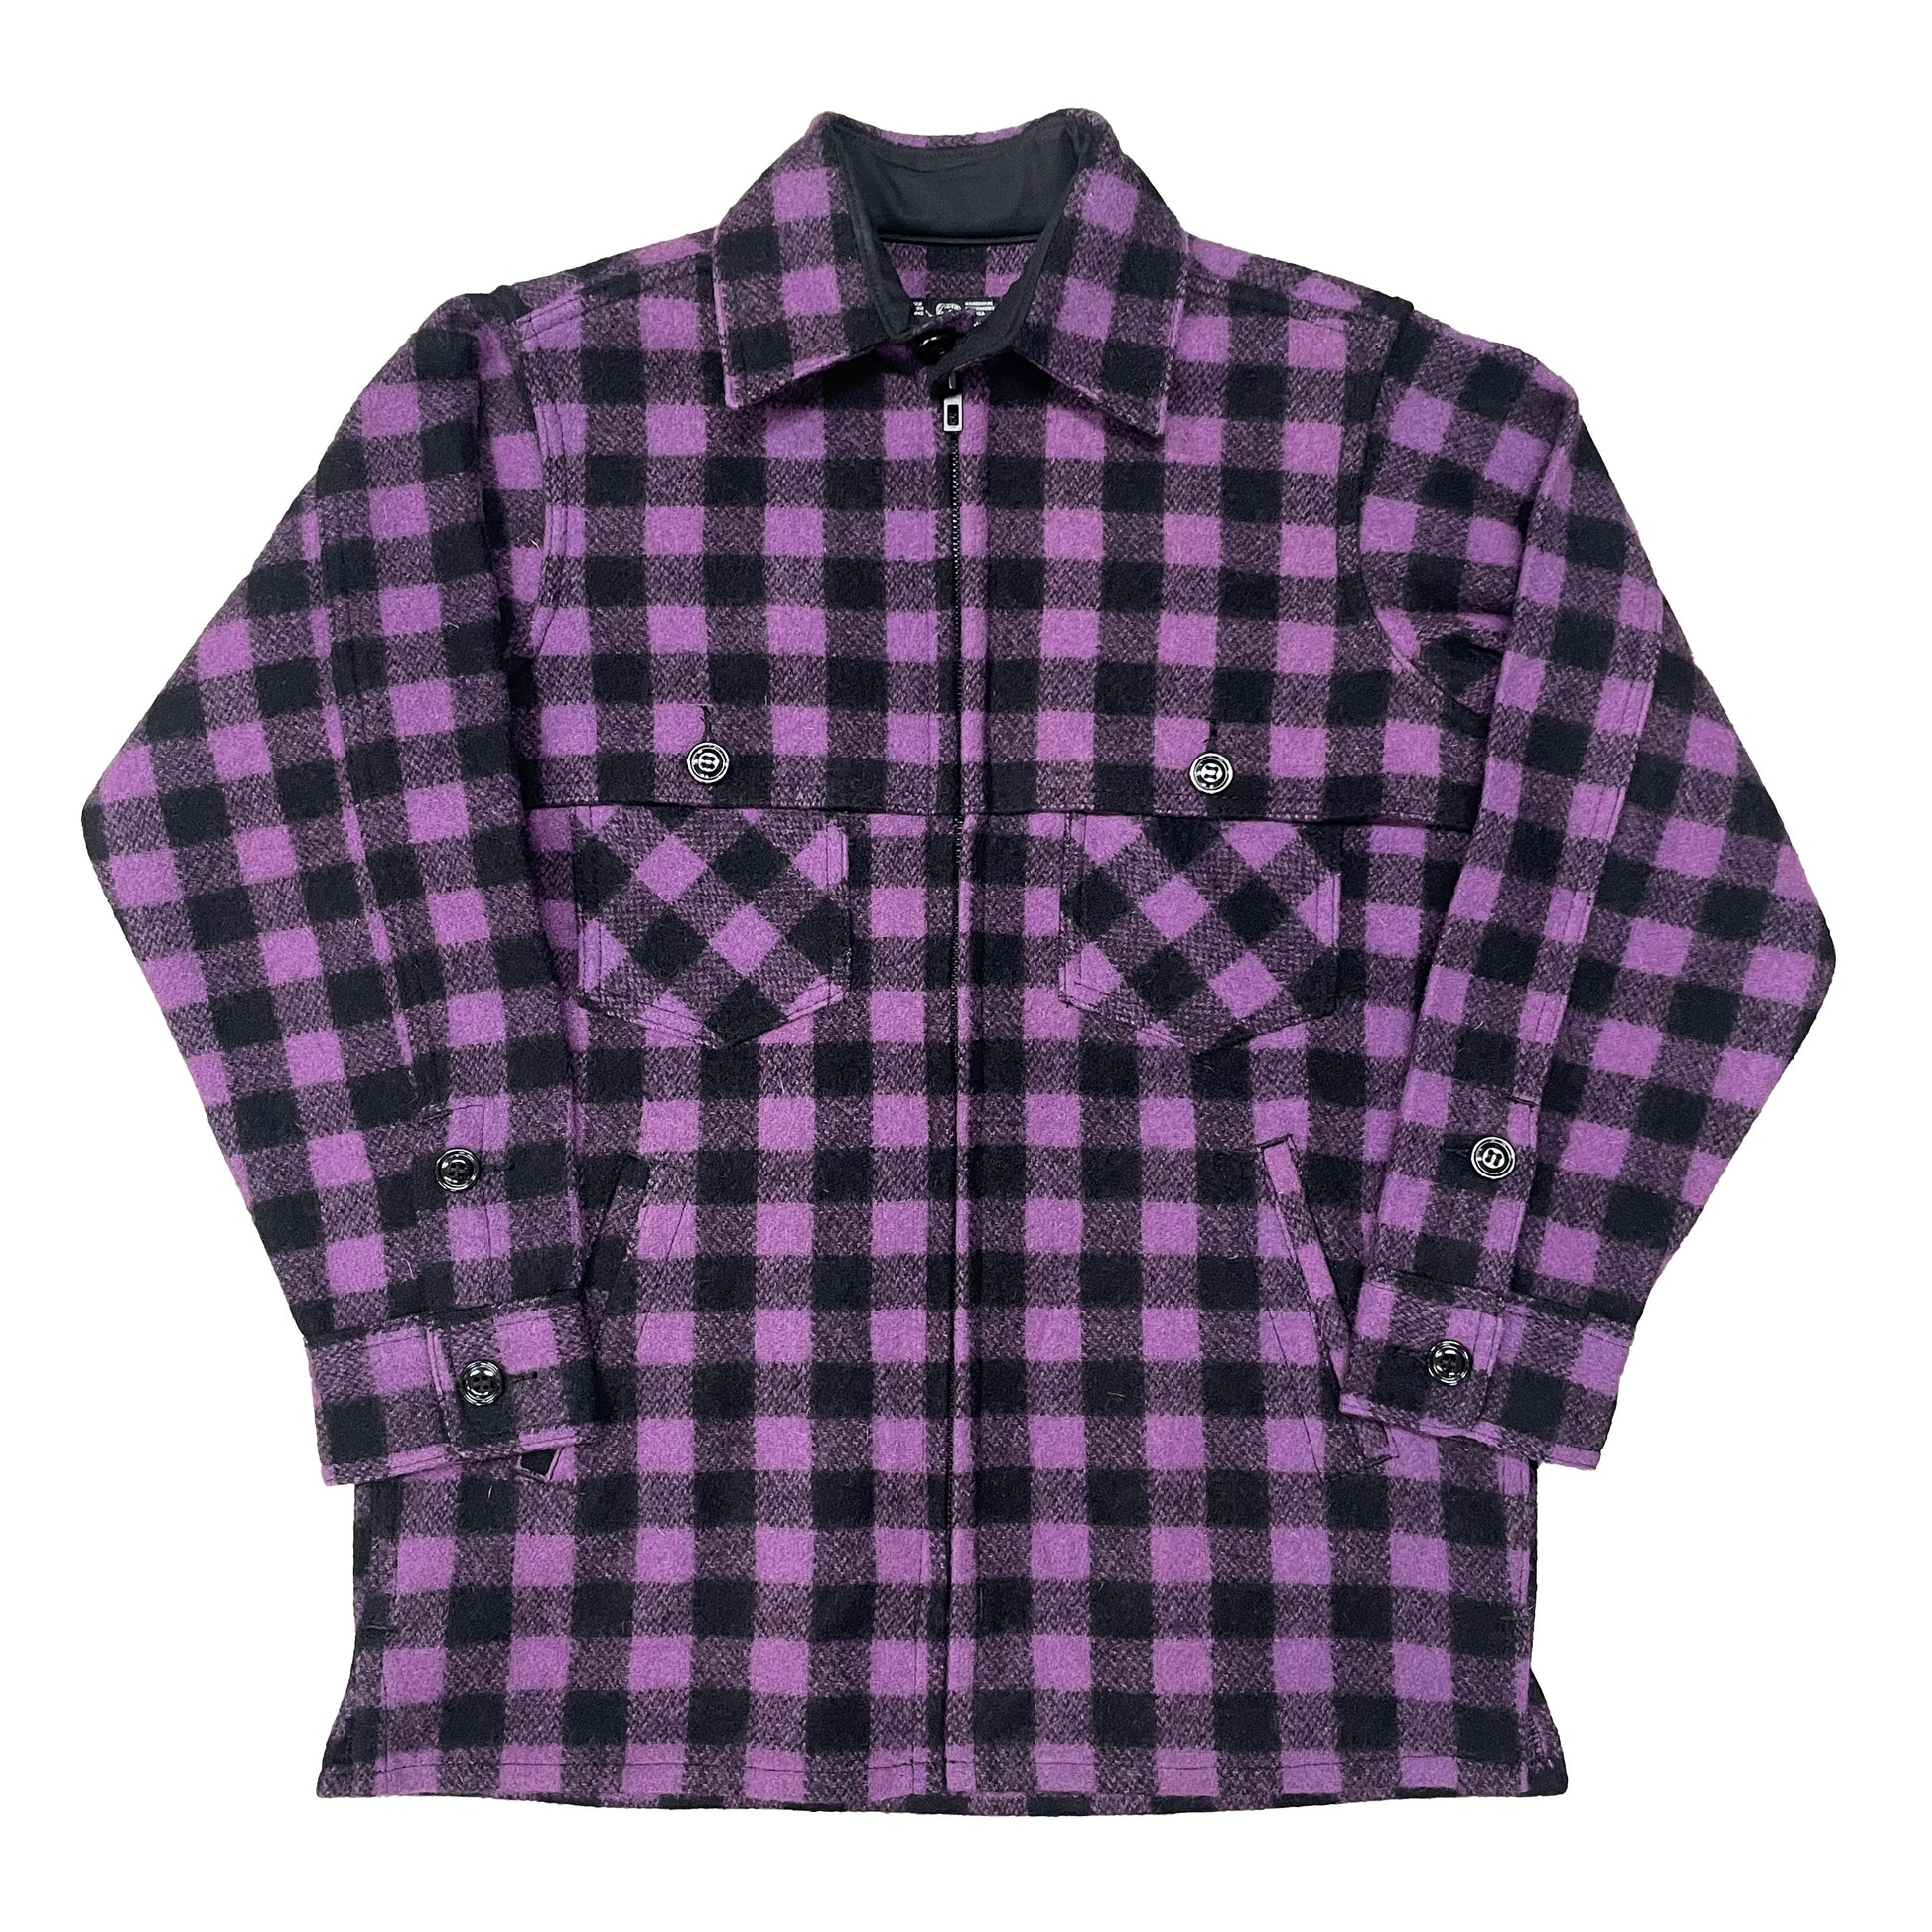 Womens Jac Shirt Lavender black small buffalo check. Double Cape over shoulders, zipper front. 